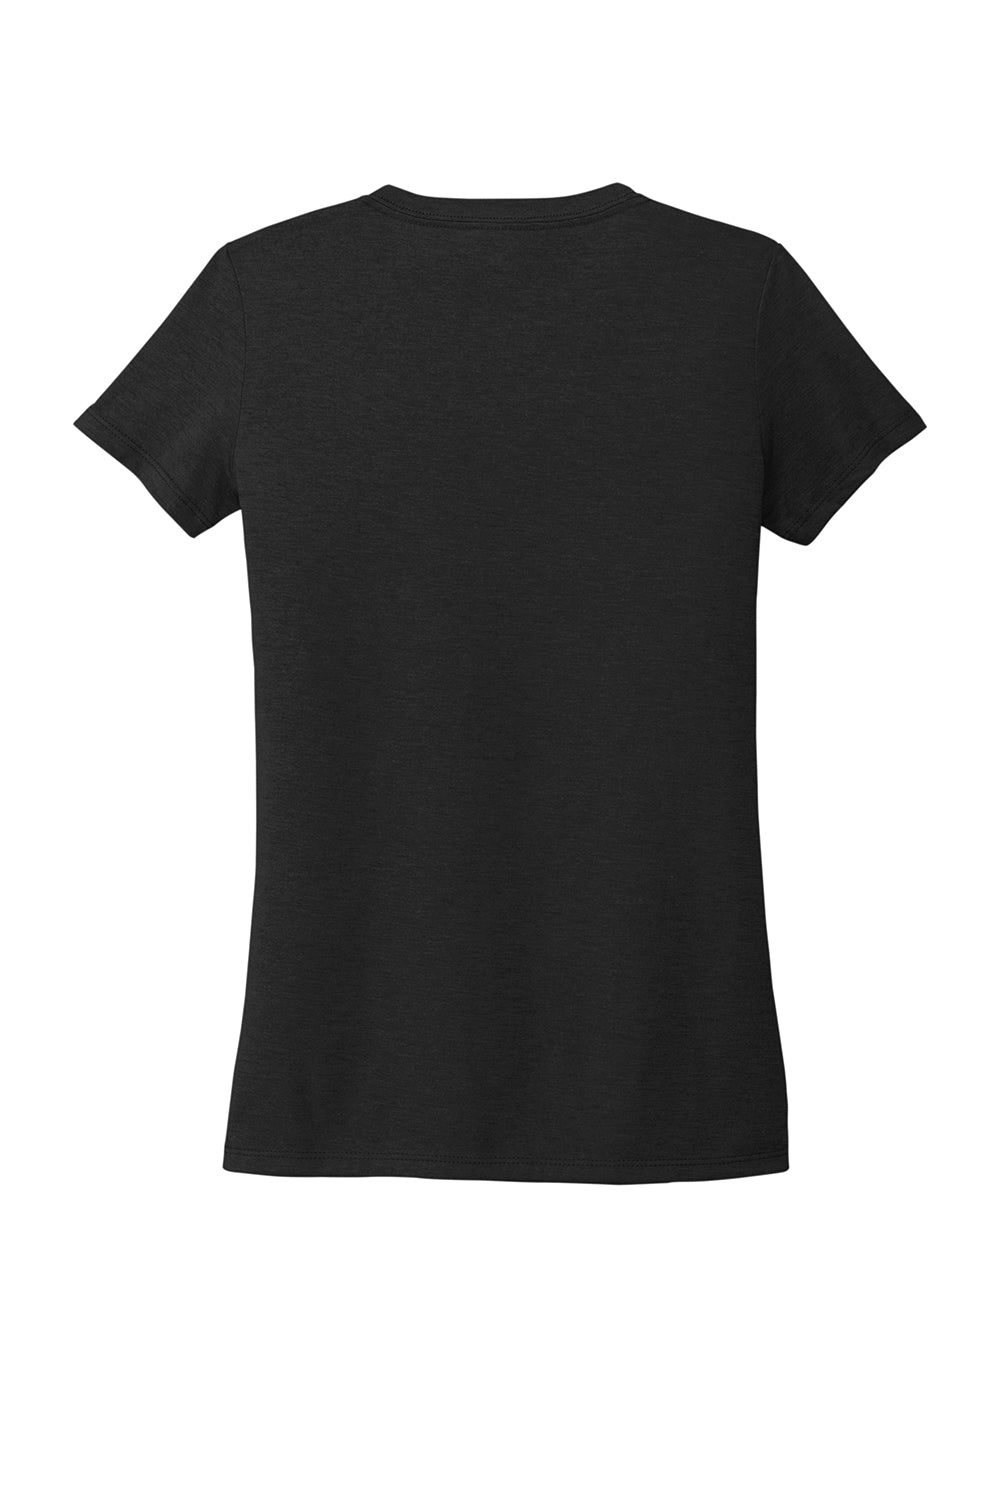 Allmade AL2018 Womens Short Sleeve V-Neck T-Shirt Deep Black Flat Back